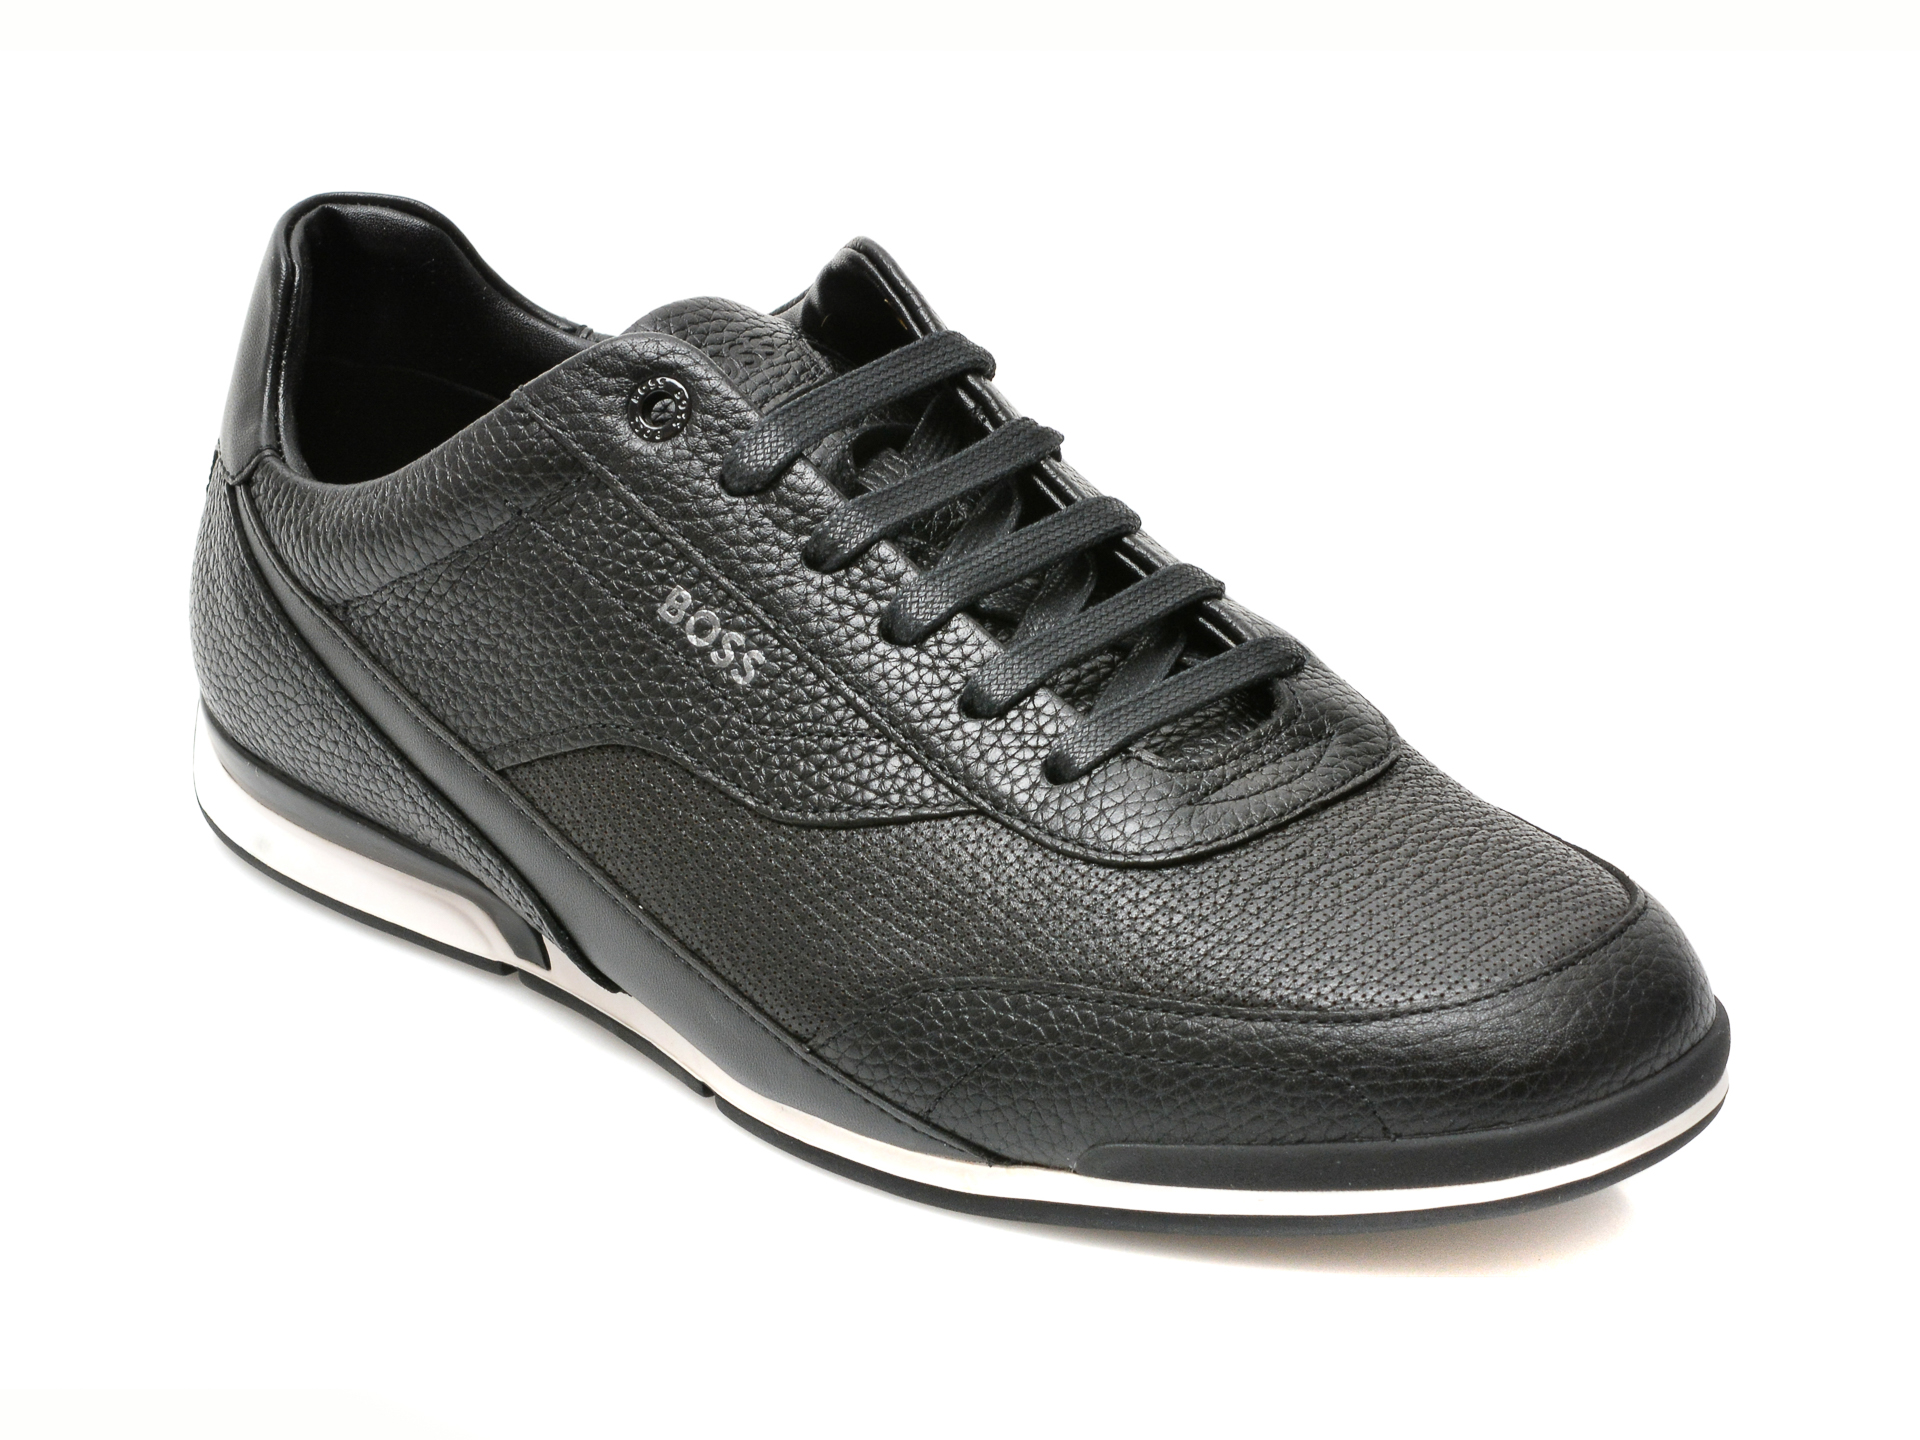 Pantofi sport HUGO BOSS negri, 378, din piele ecologica Hugo Boss Hugo Boss